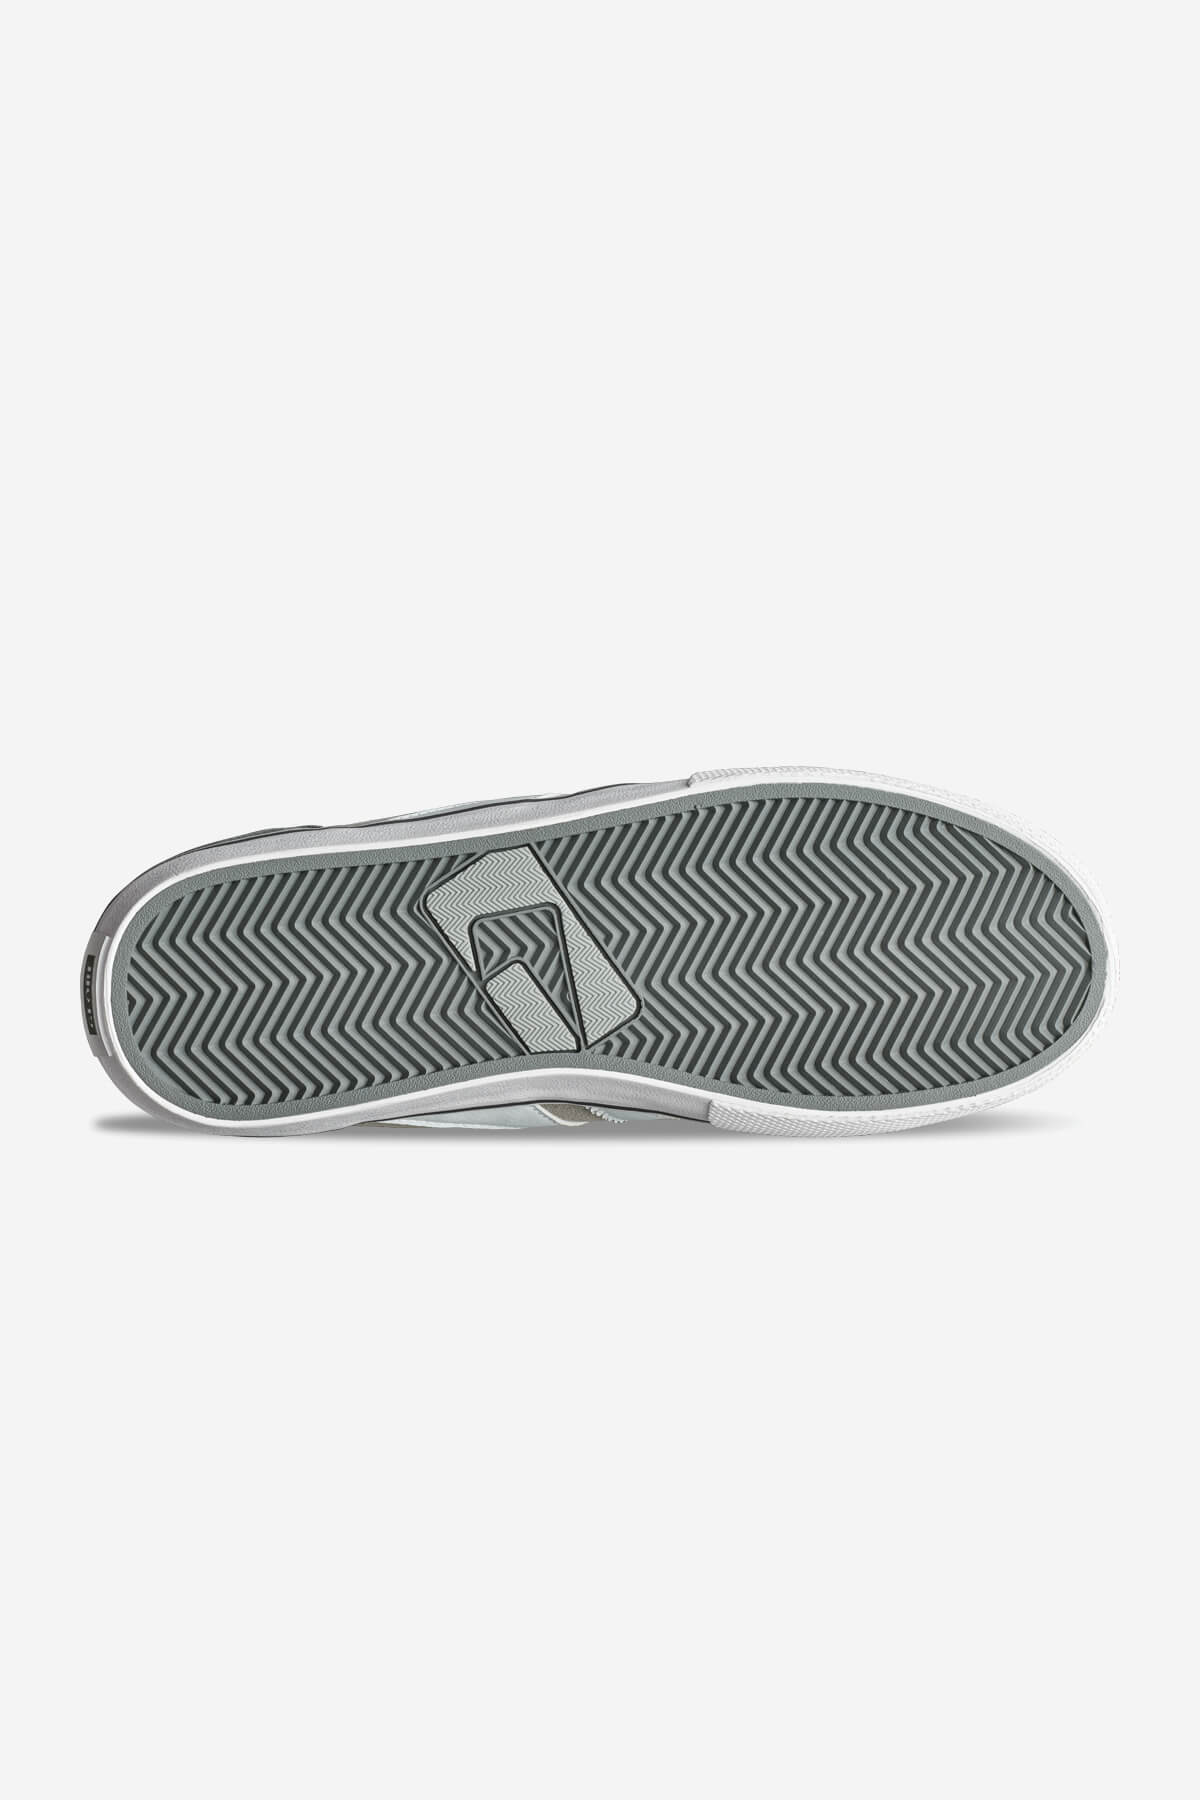 encore-2 charcoal white  skateboard  zapatos